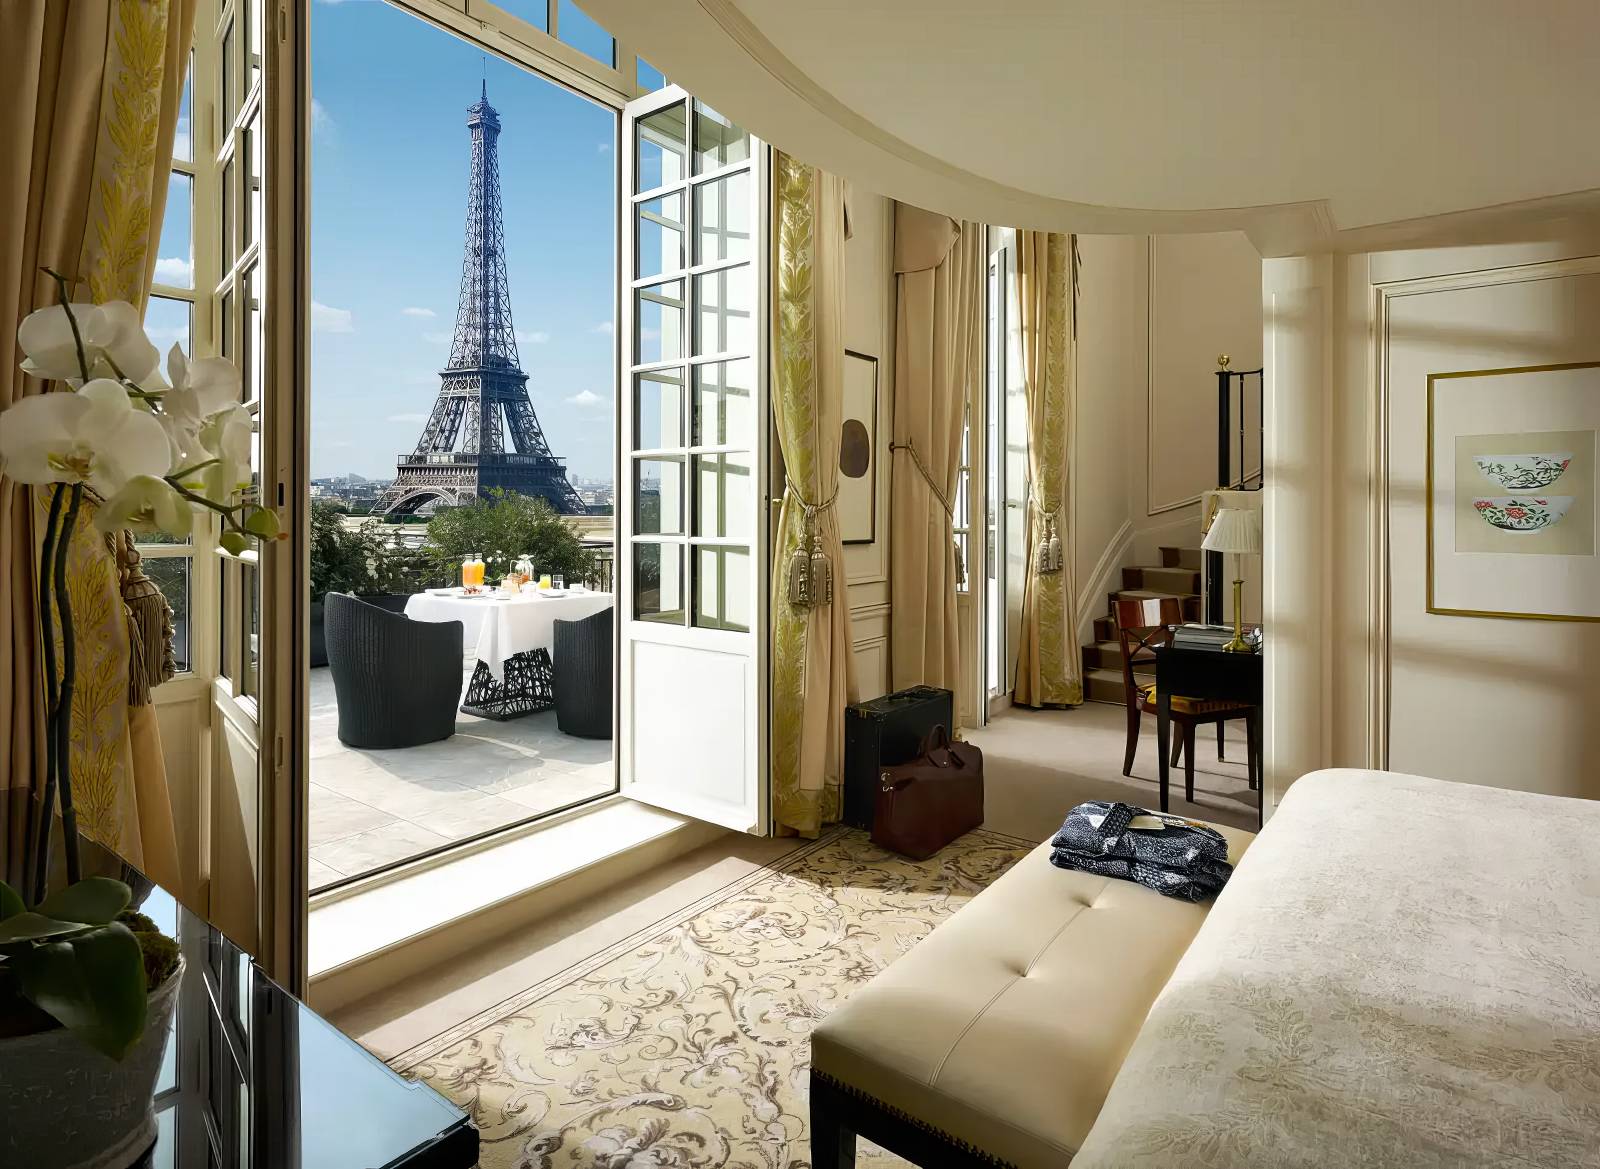 Paris Hotels with Eiffel Tower View Shangri-La